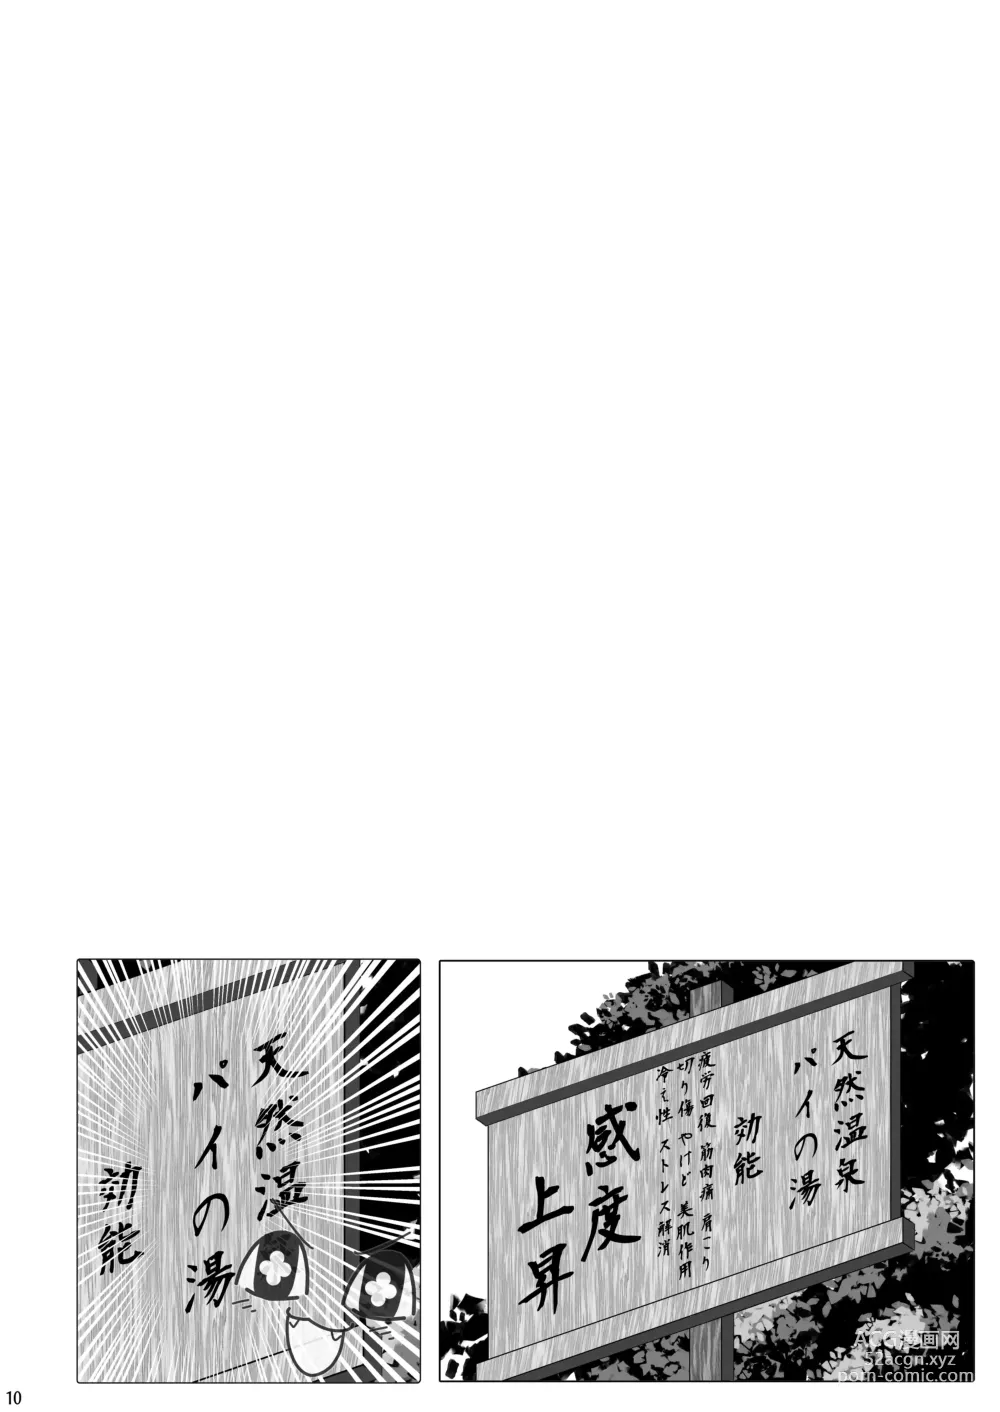 Page 11 of doujinshi 세피아씨 3전3패